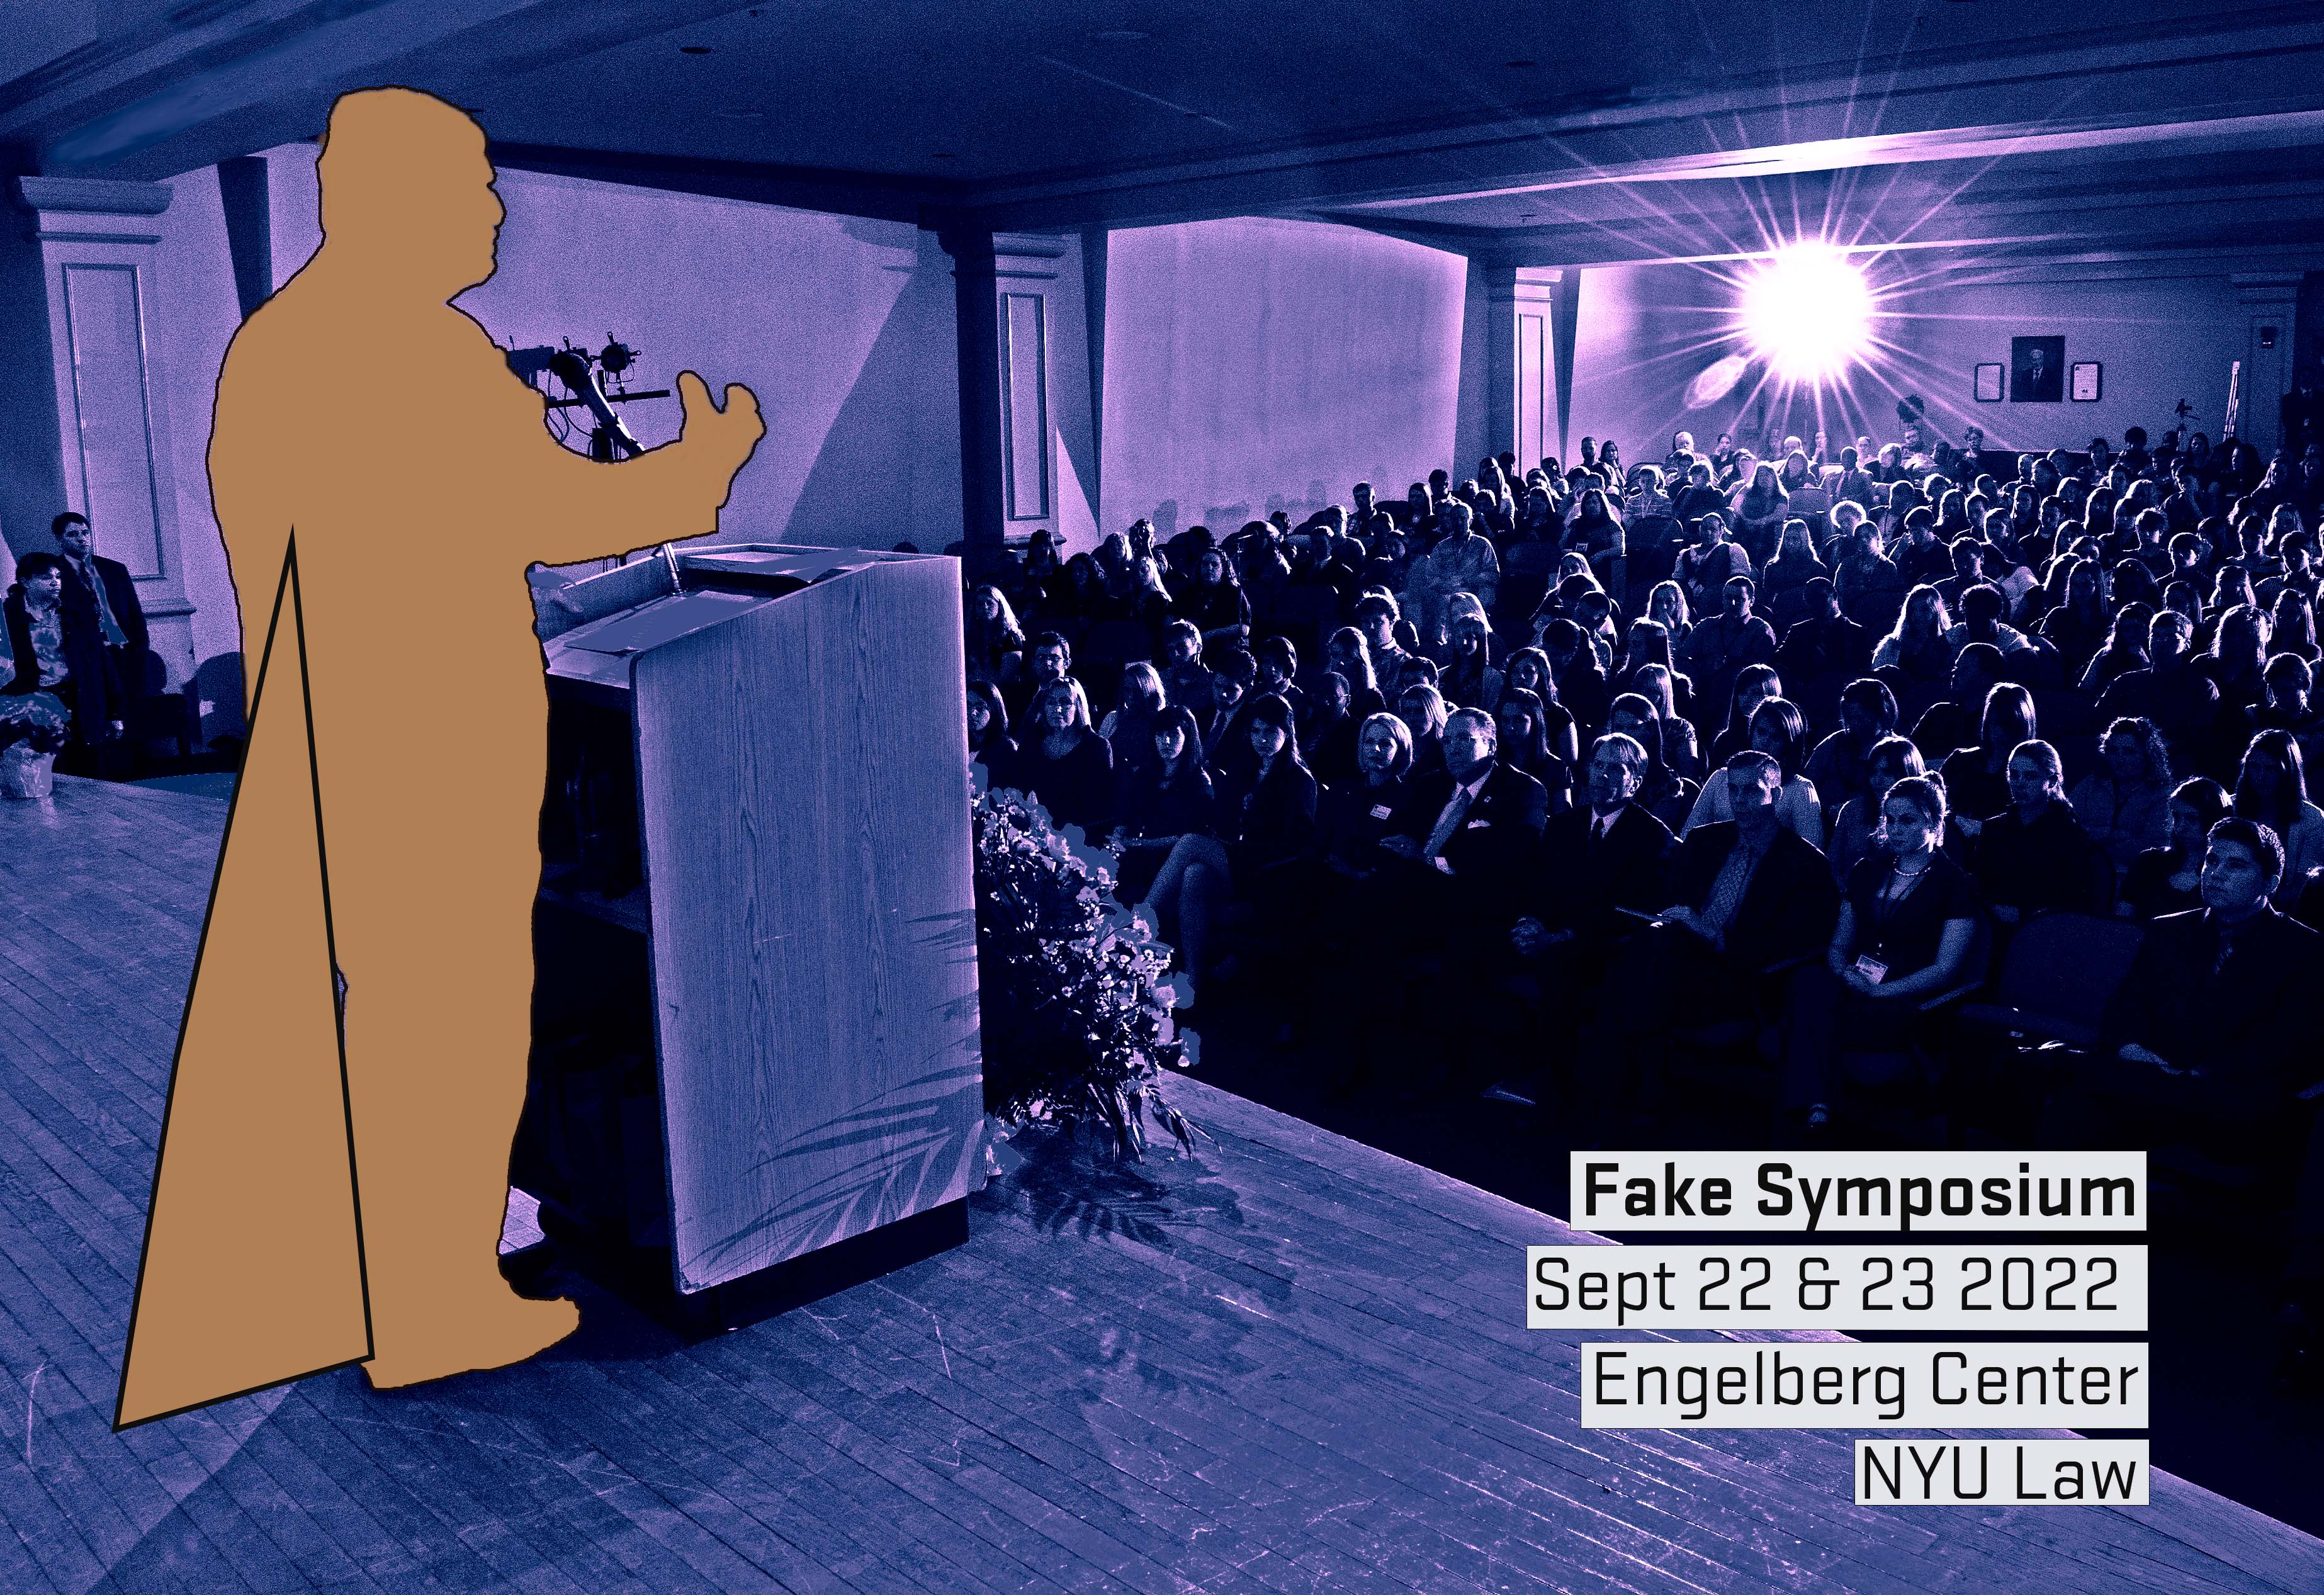 Event image for Fake Symposium event